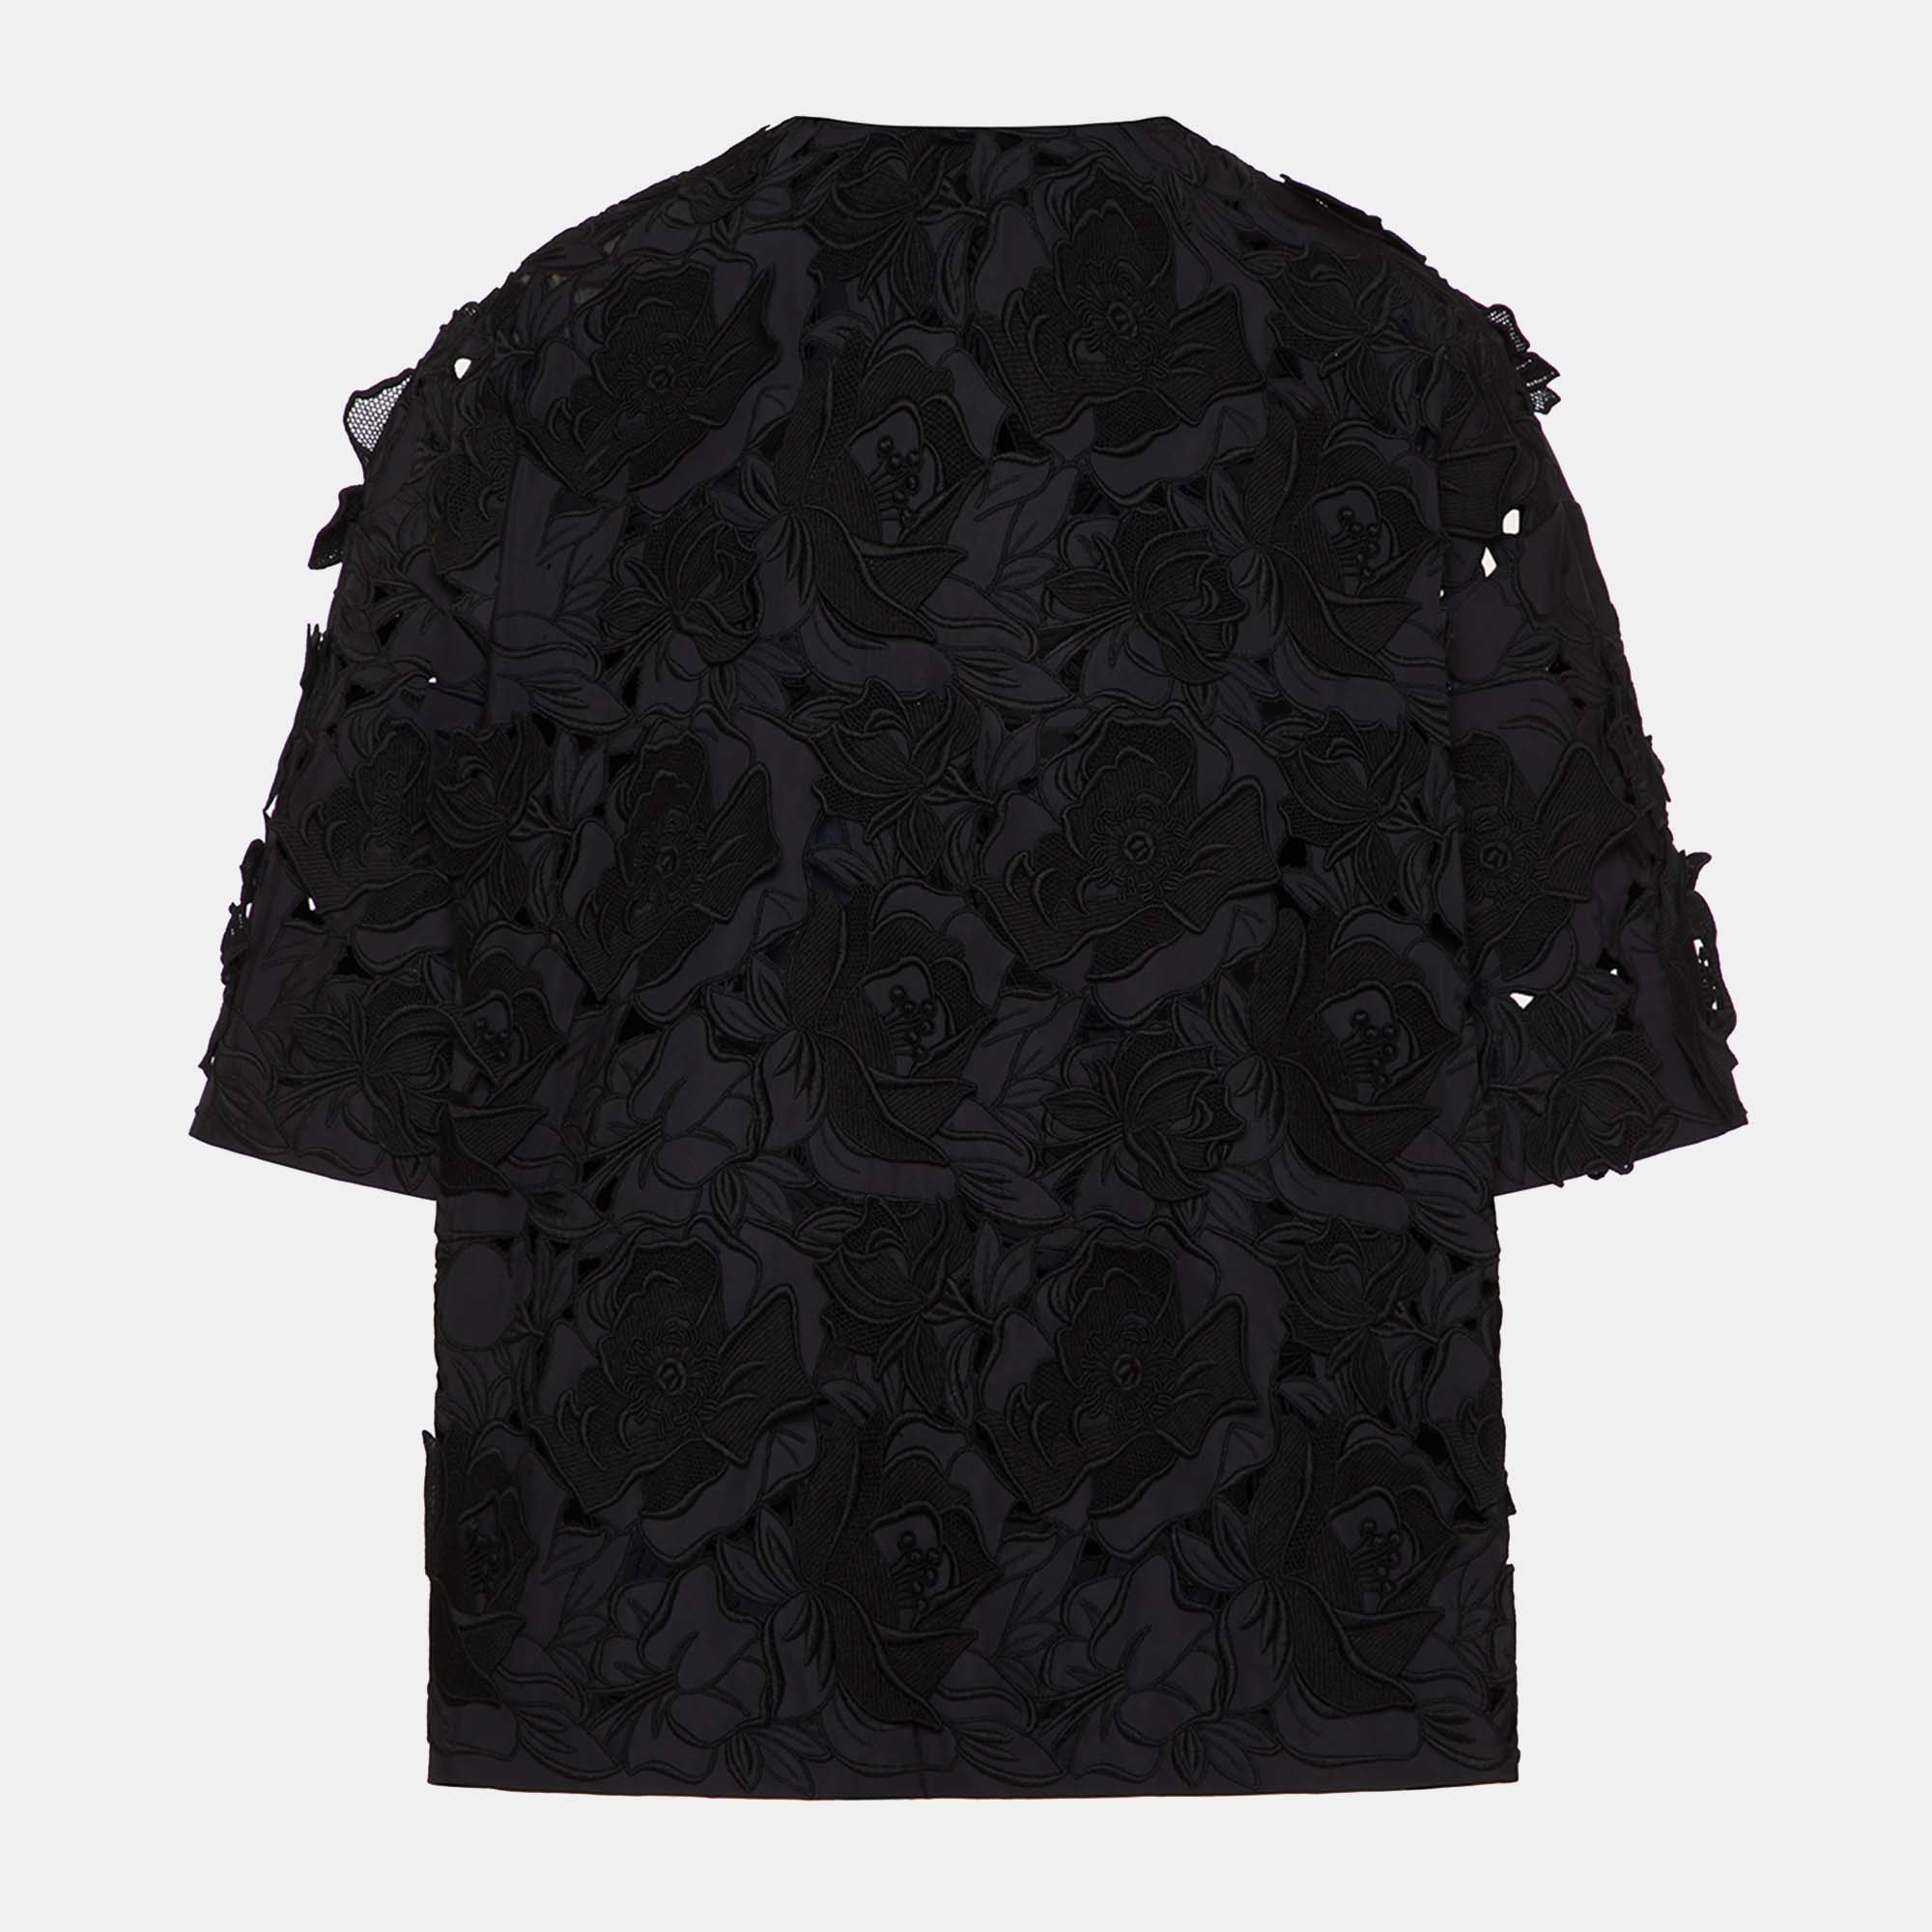 

Valentino Black Macrame Floral Applique T-Shirt